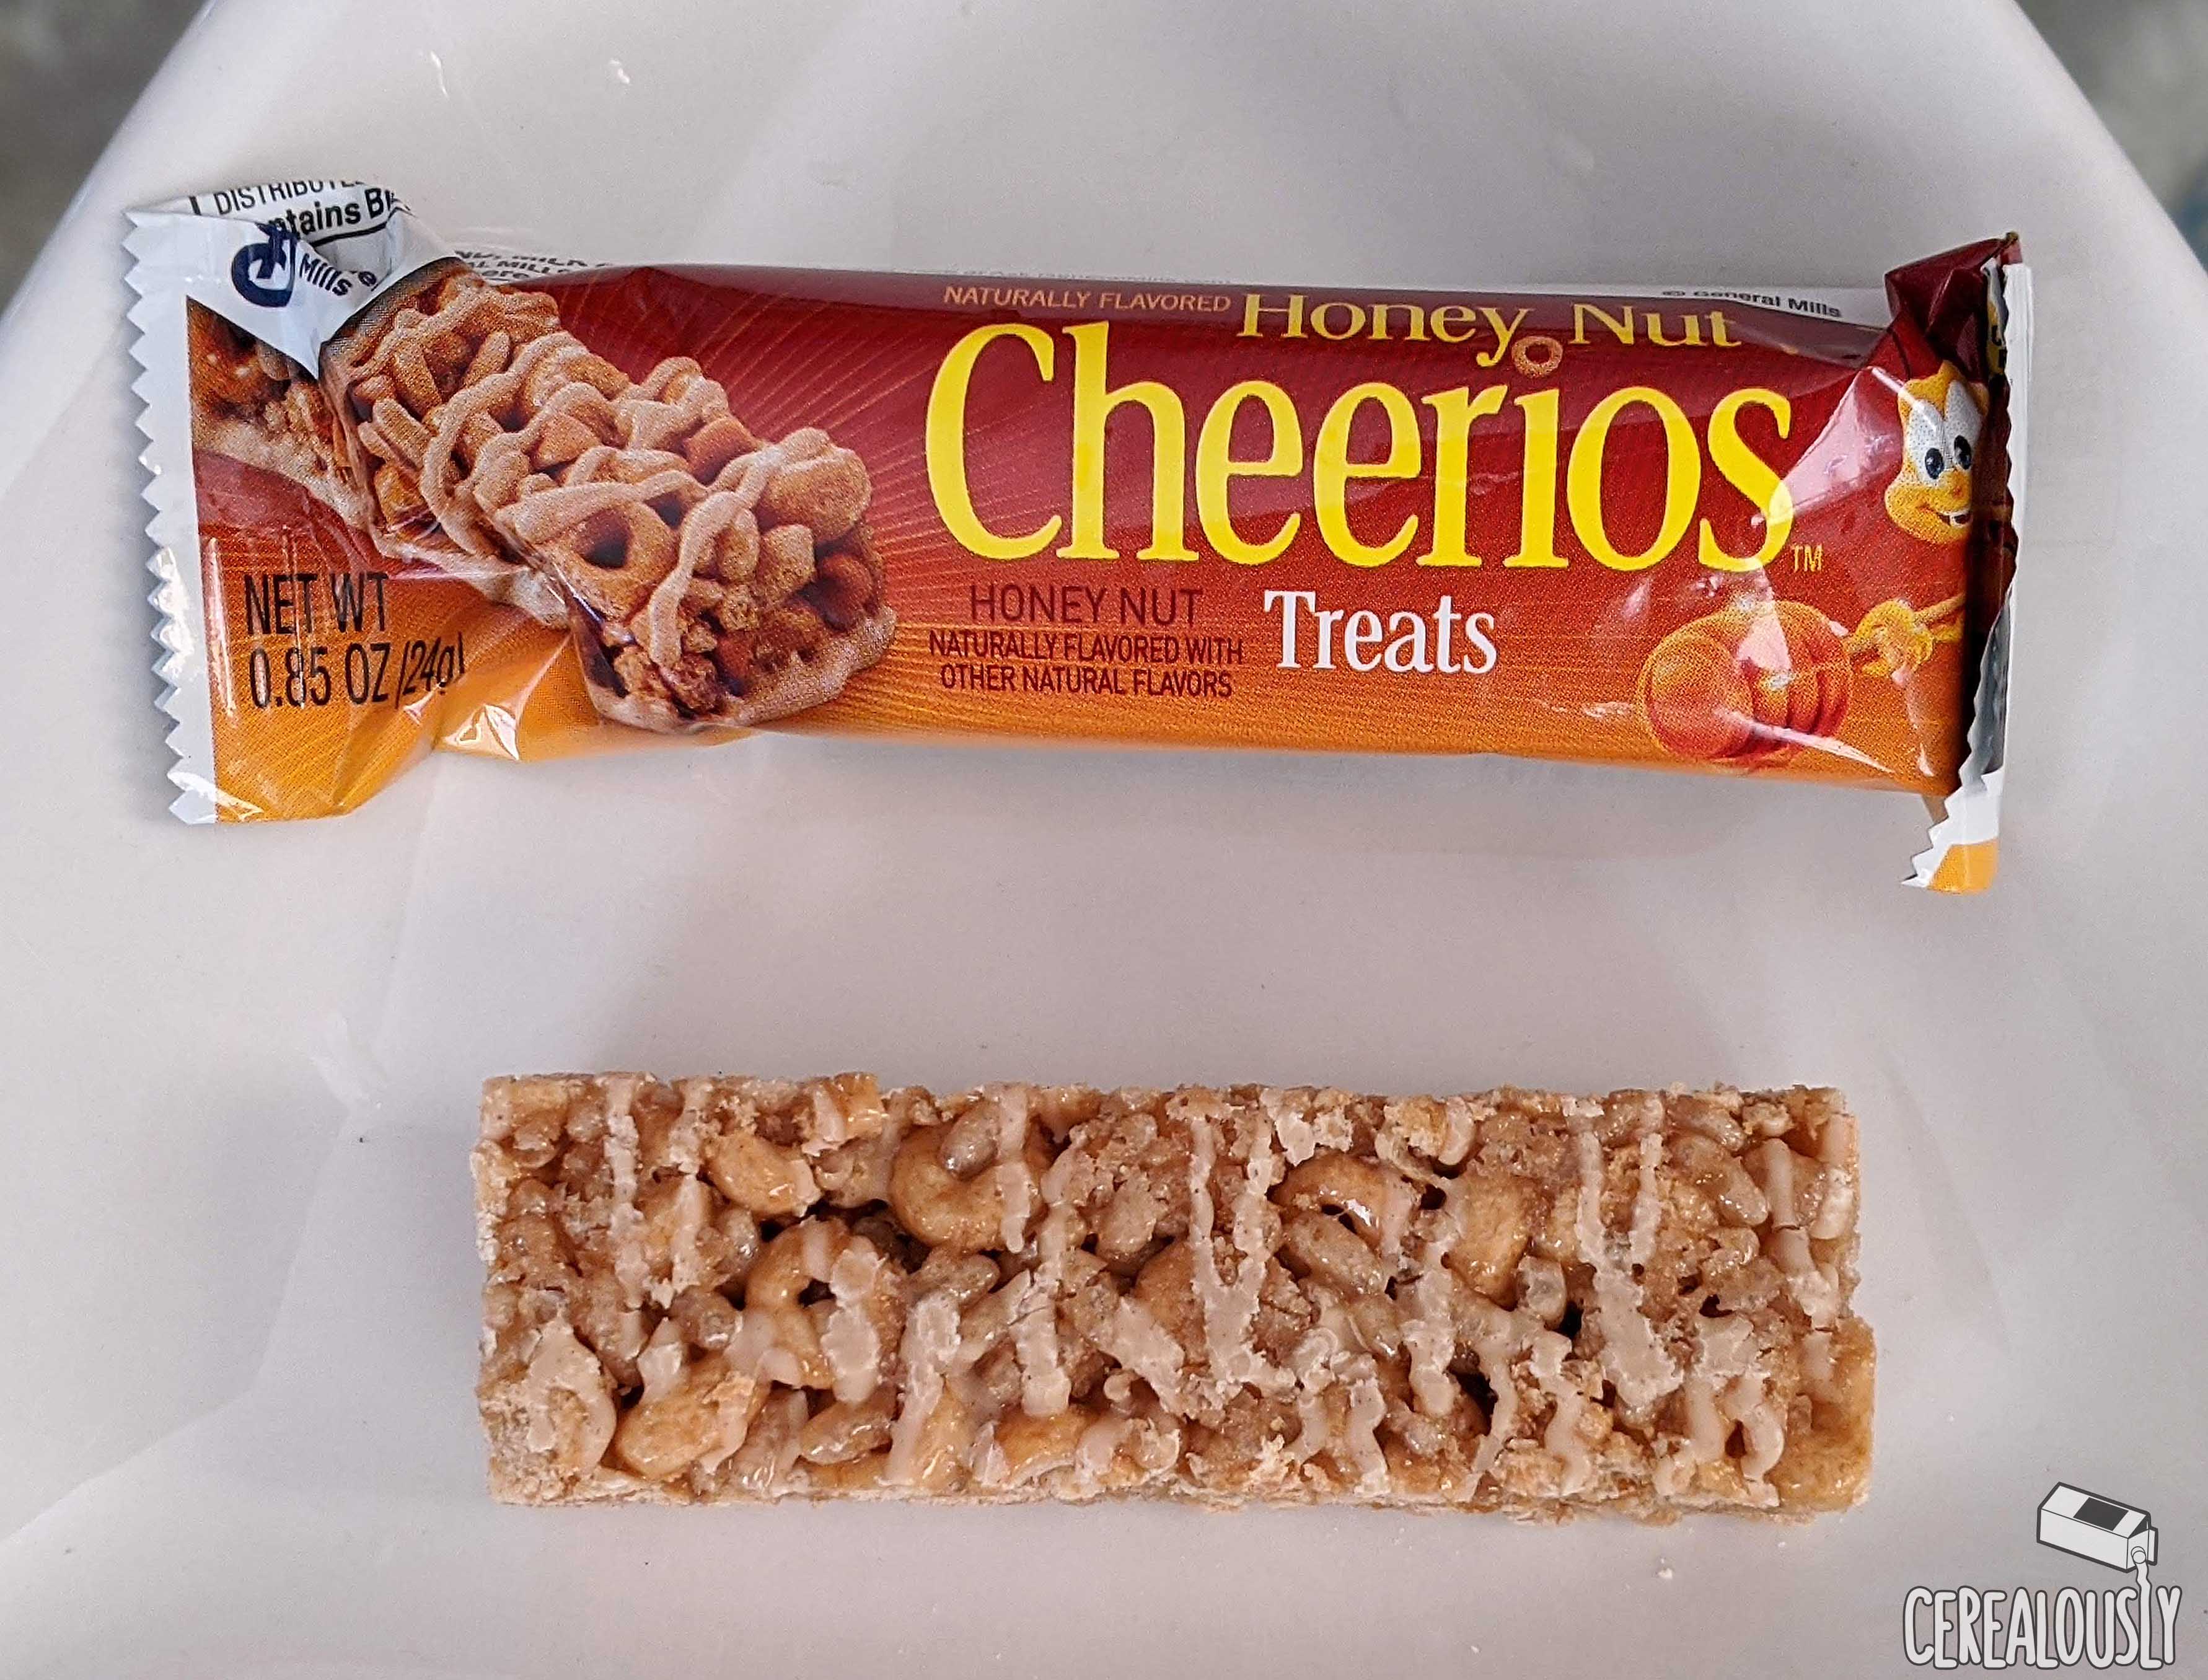 https://www.cerealously.net/wp-content/uploads/2020/03/new-general-mills-honey-nut-cheerios-treats-review.jpg